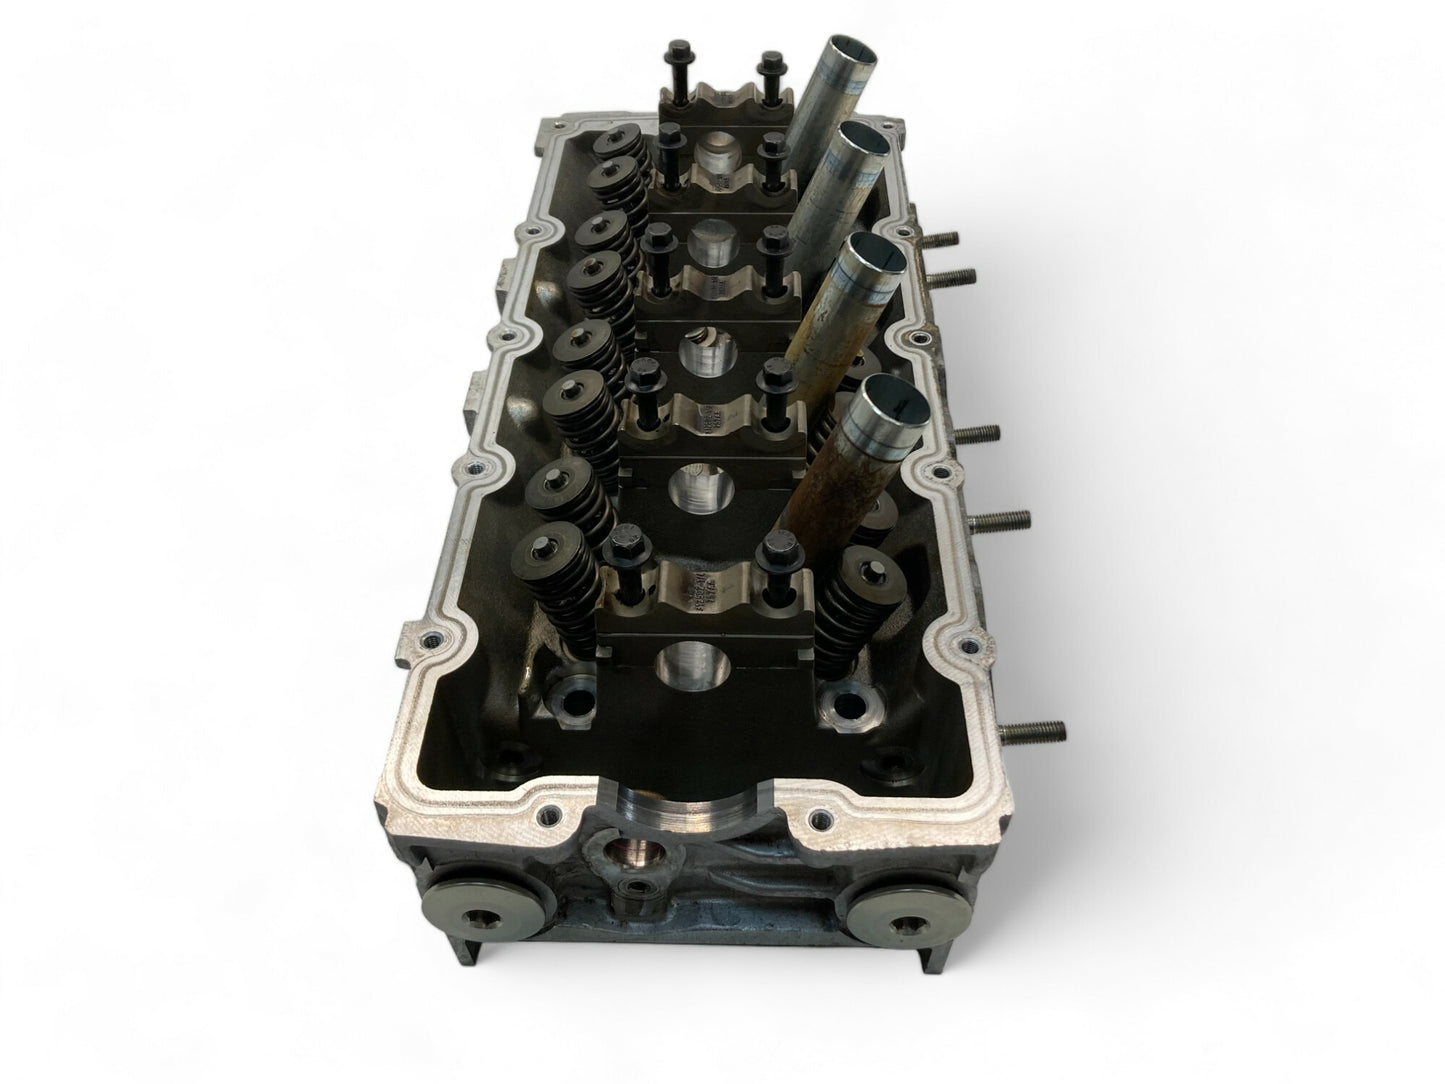 Mini Cooper Engine Cylinder Head 11127508536 02-08 R50 R52 R53 423